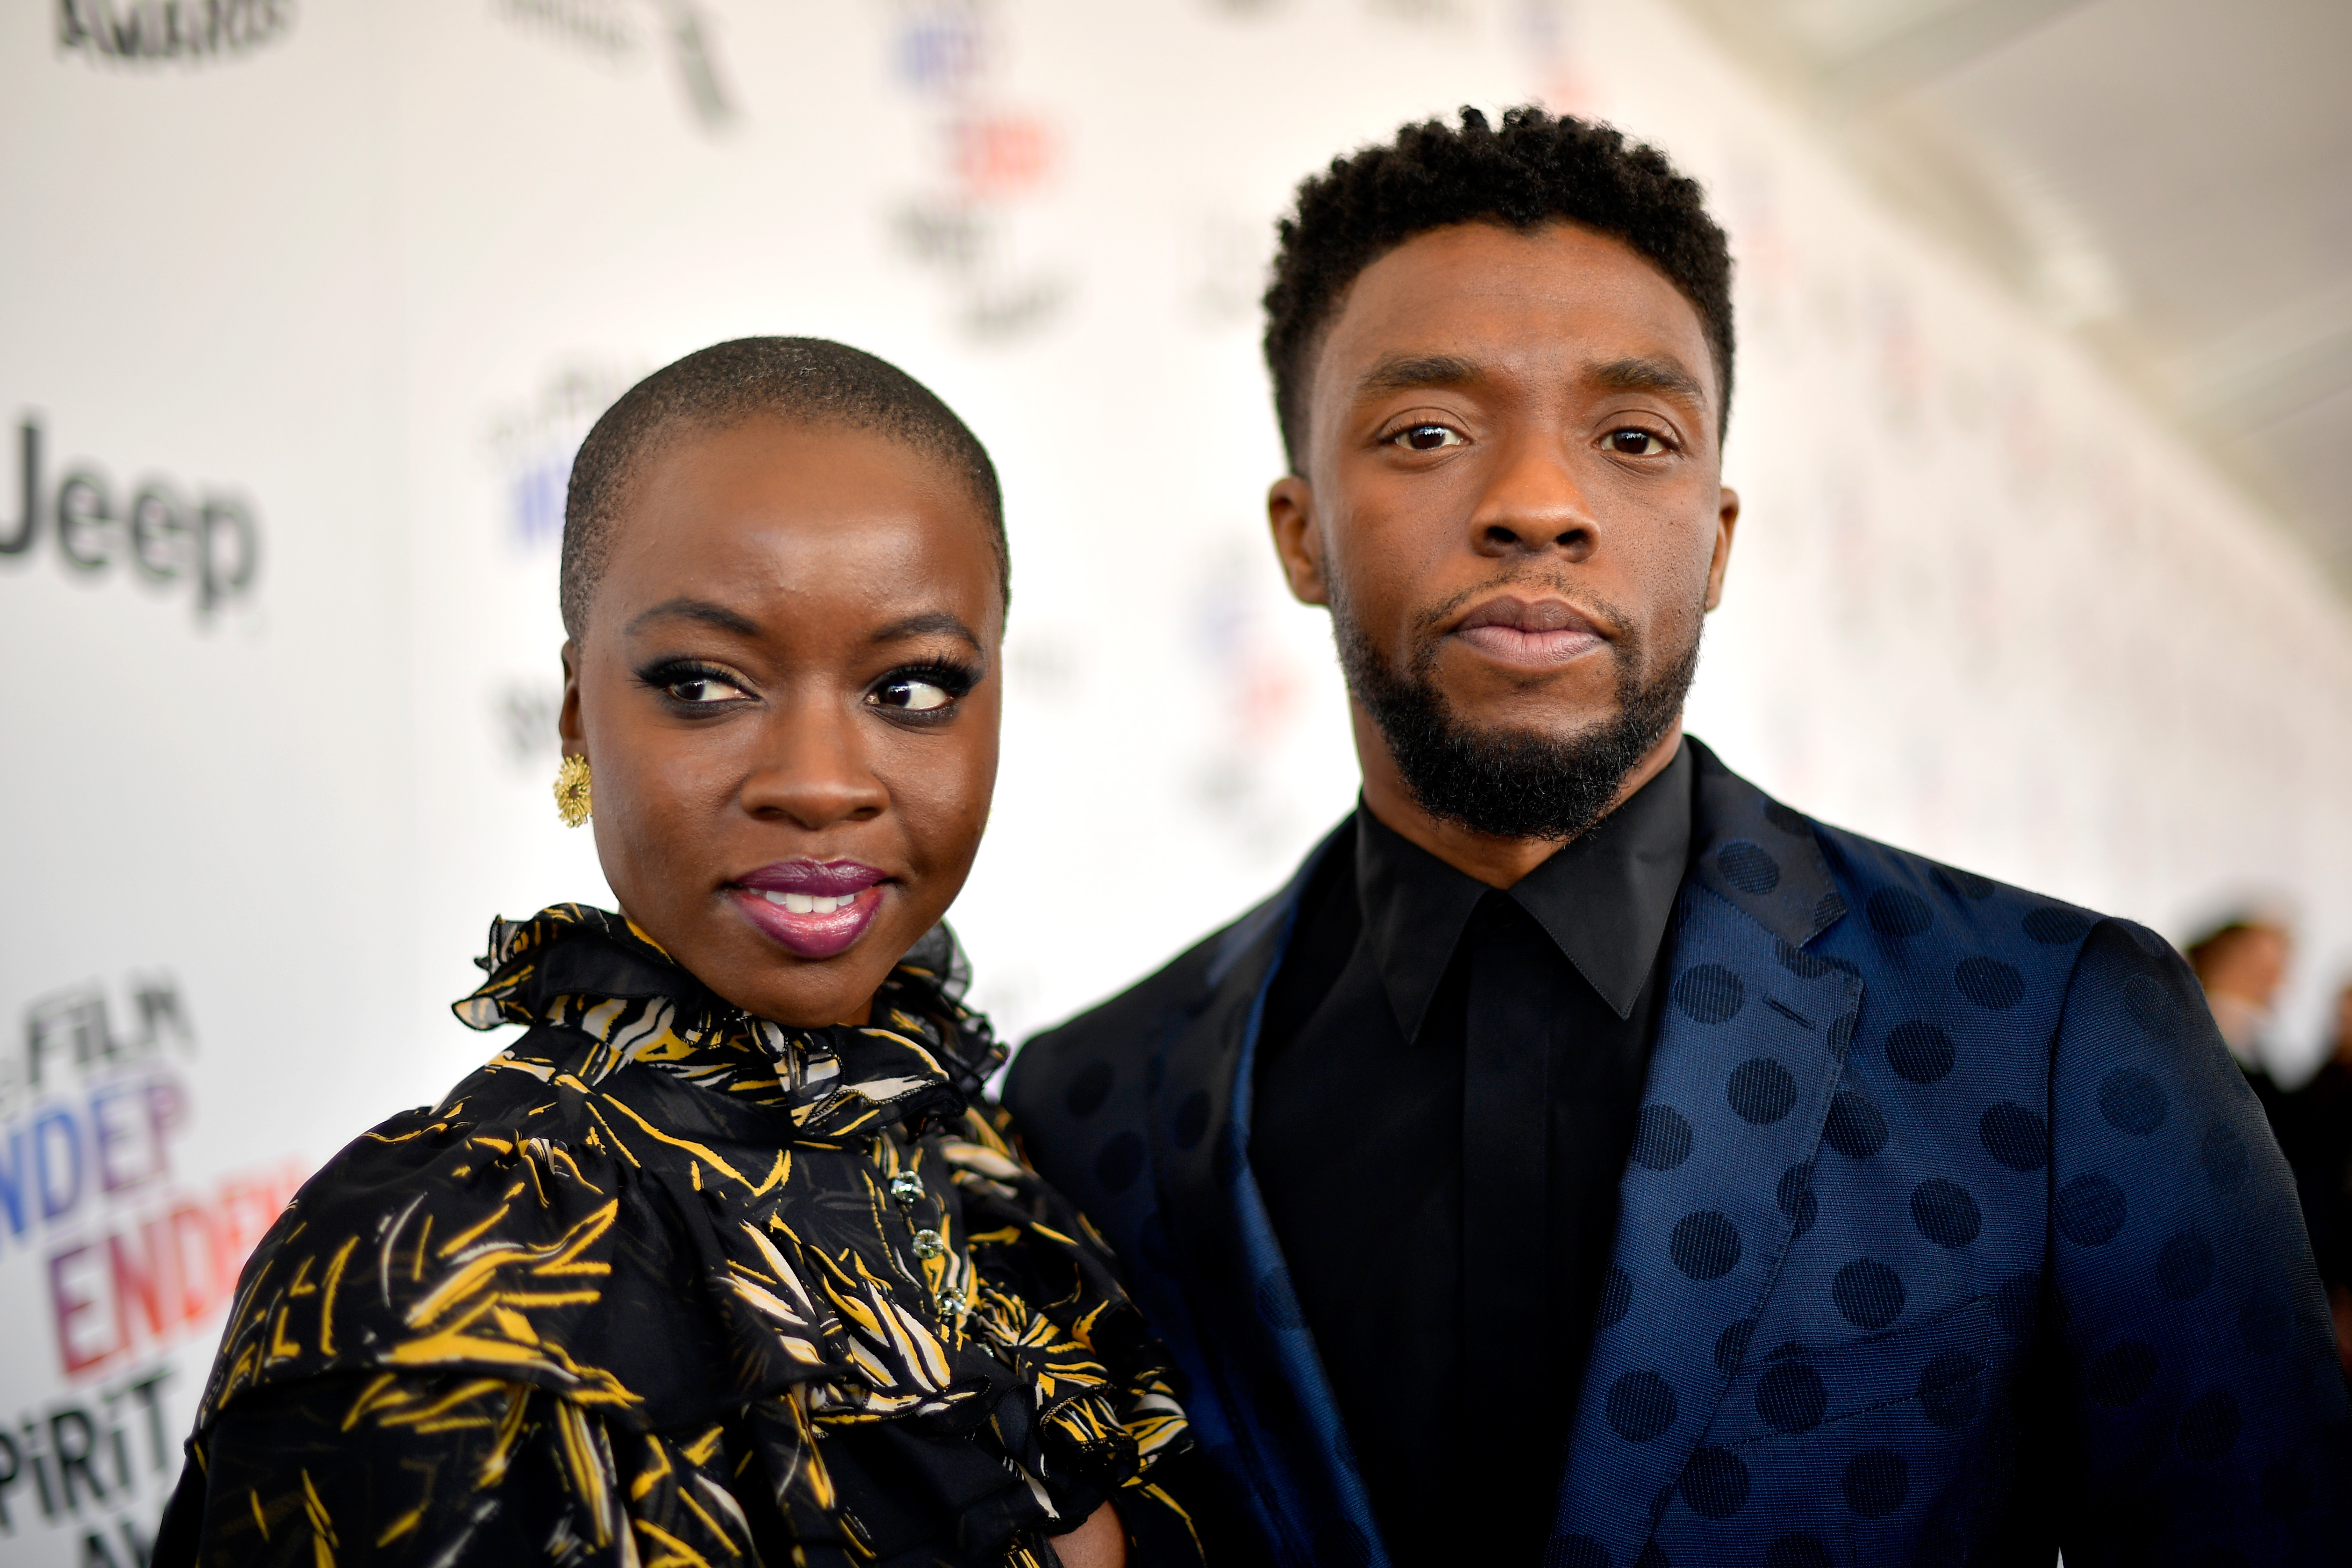 Danai Gurira To Reprise Role As Okoye In “Black Panther 2” & Origin Series For Disney+